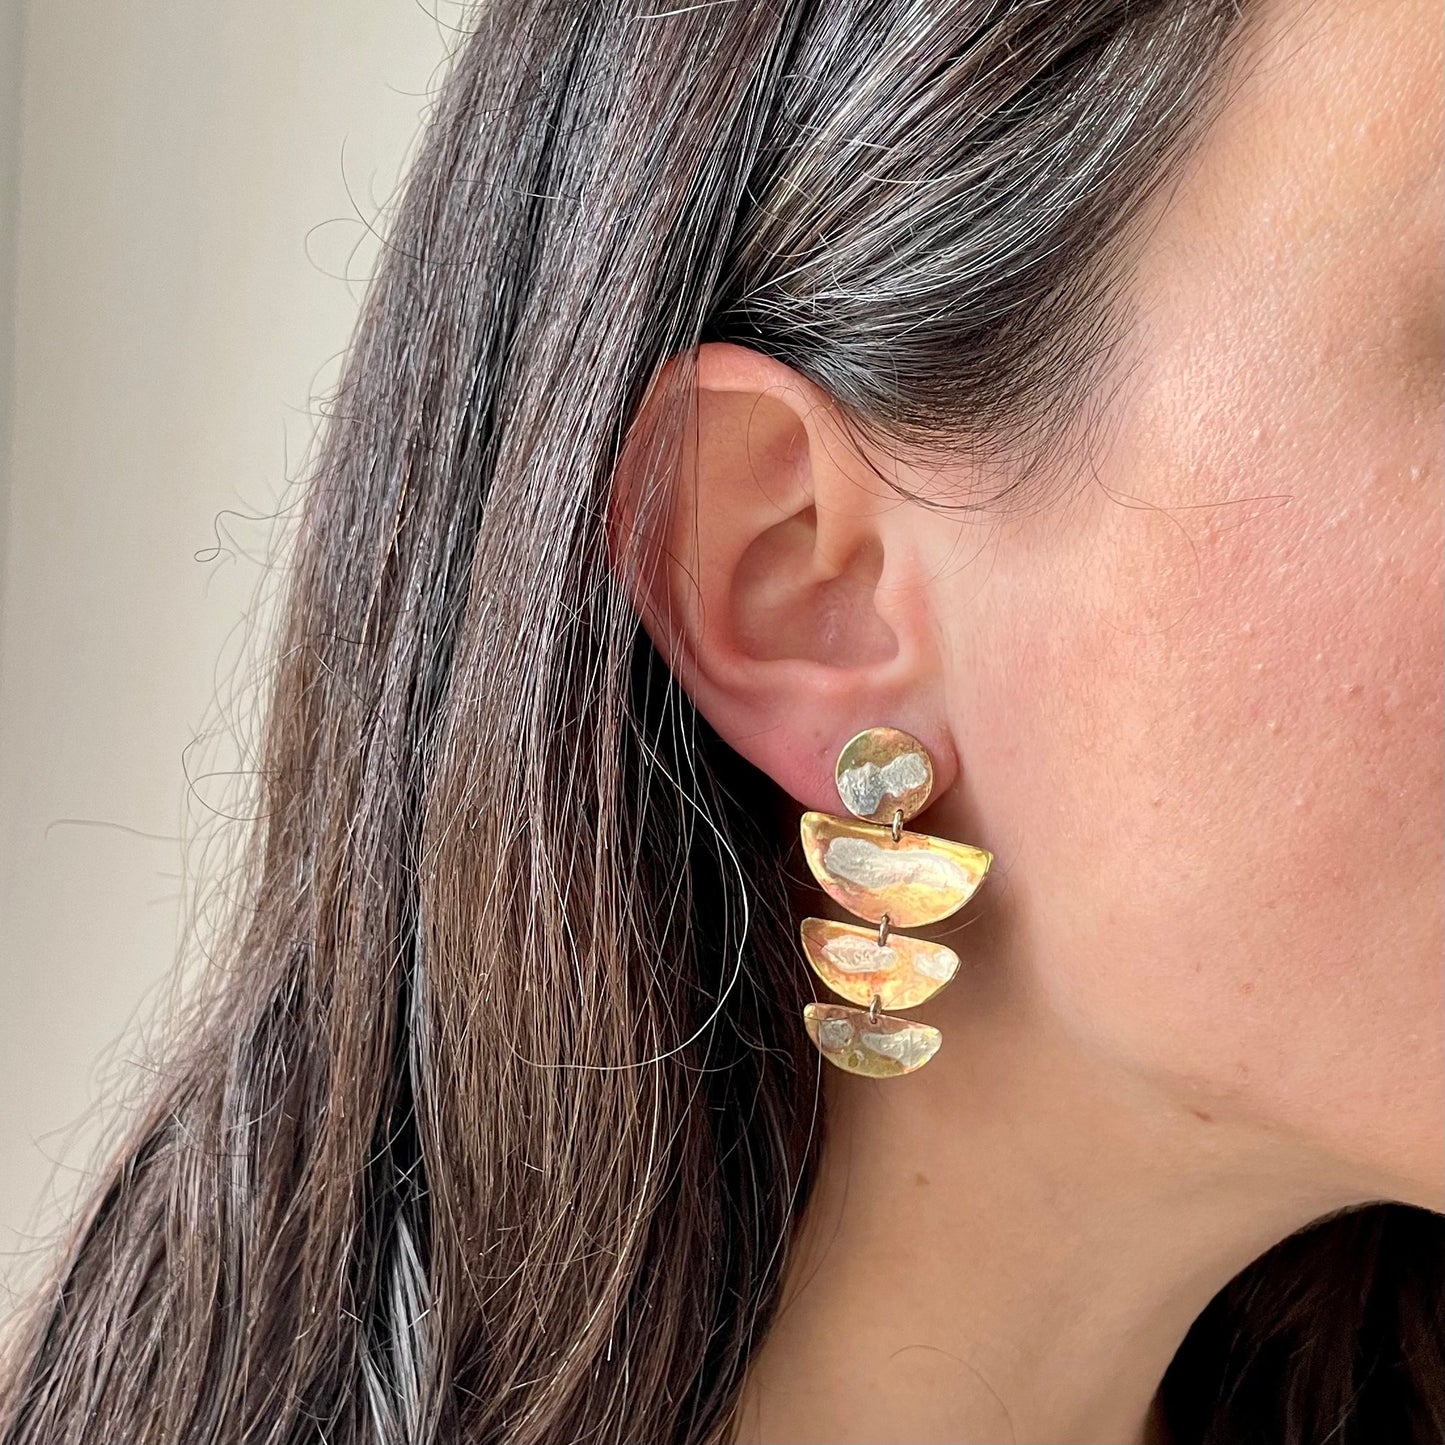 Lyla Earrings: handmade brass earrings with three half moon shapes in brass with molten swirls of recycled silver. Worn by a model.